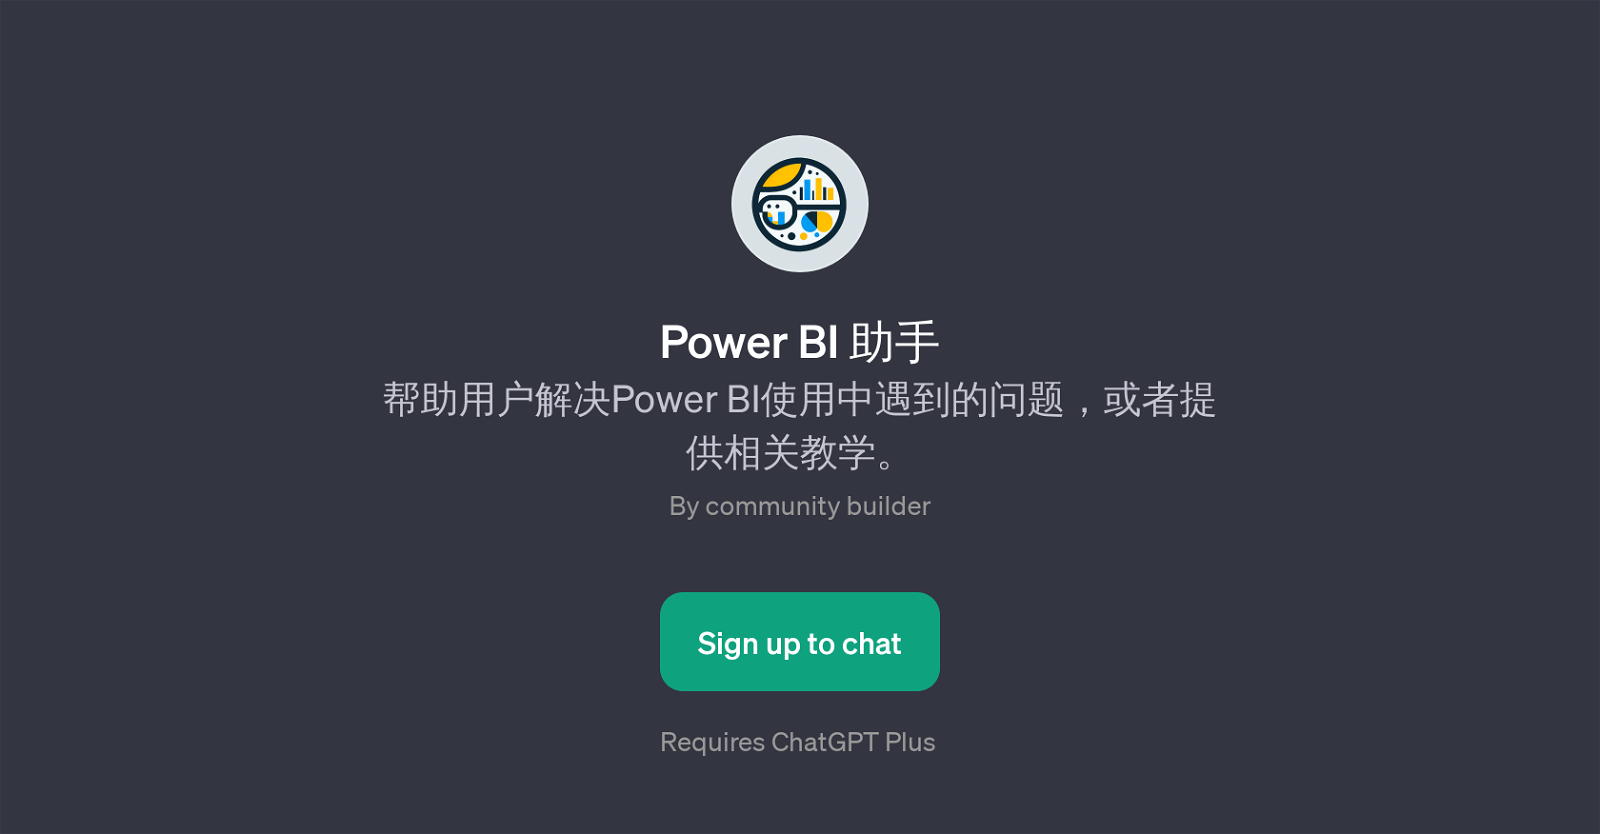 Power BI website